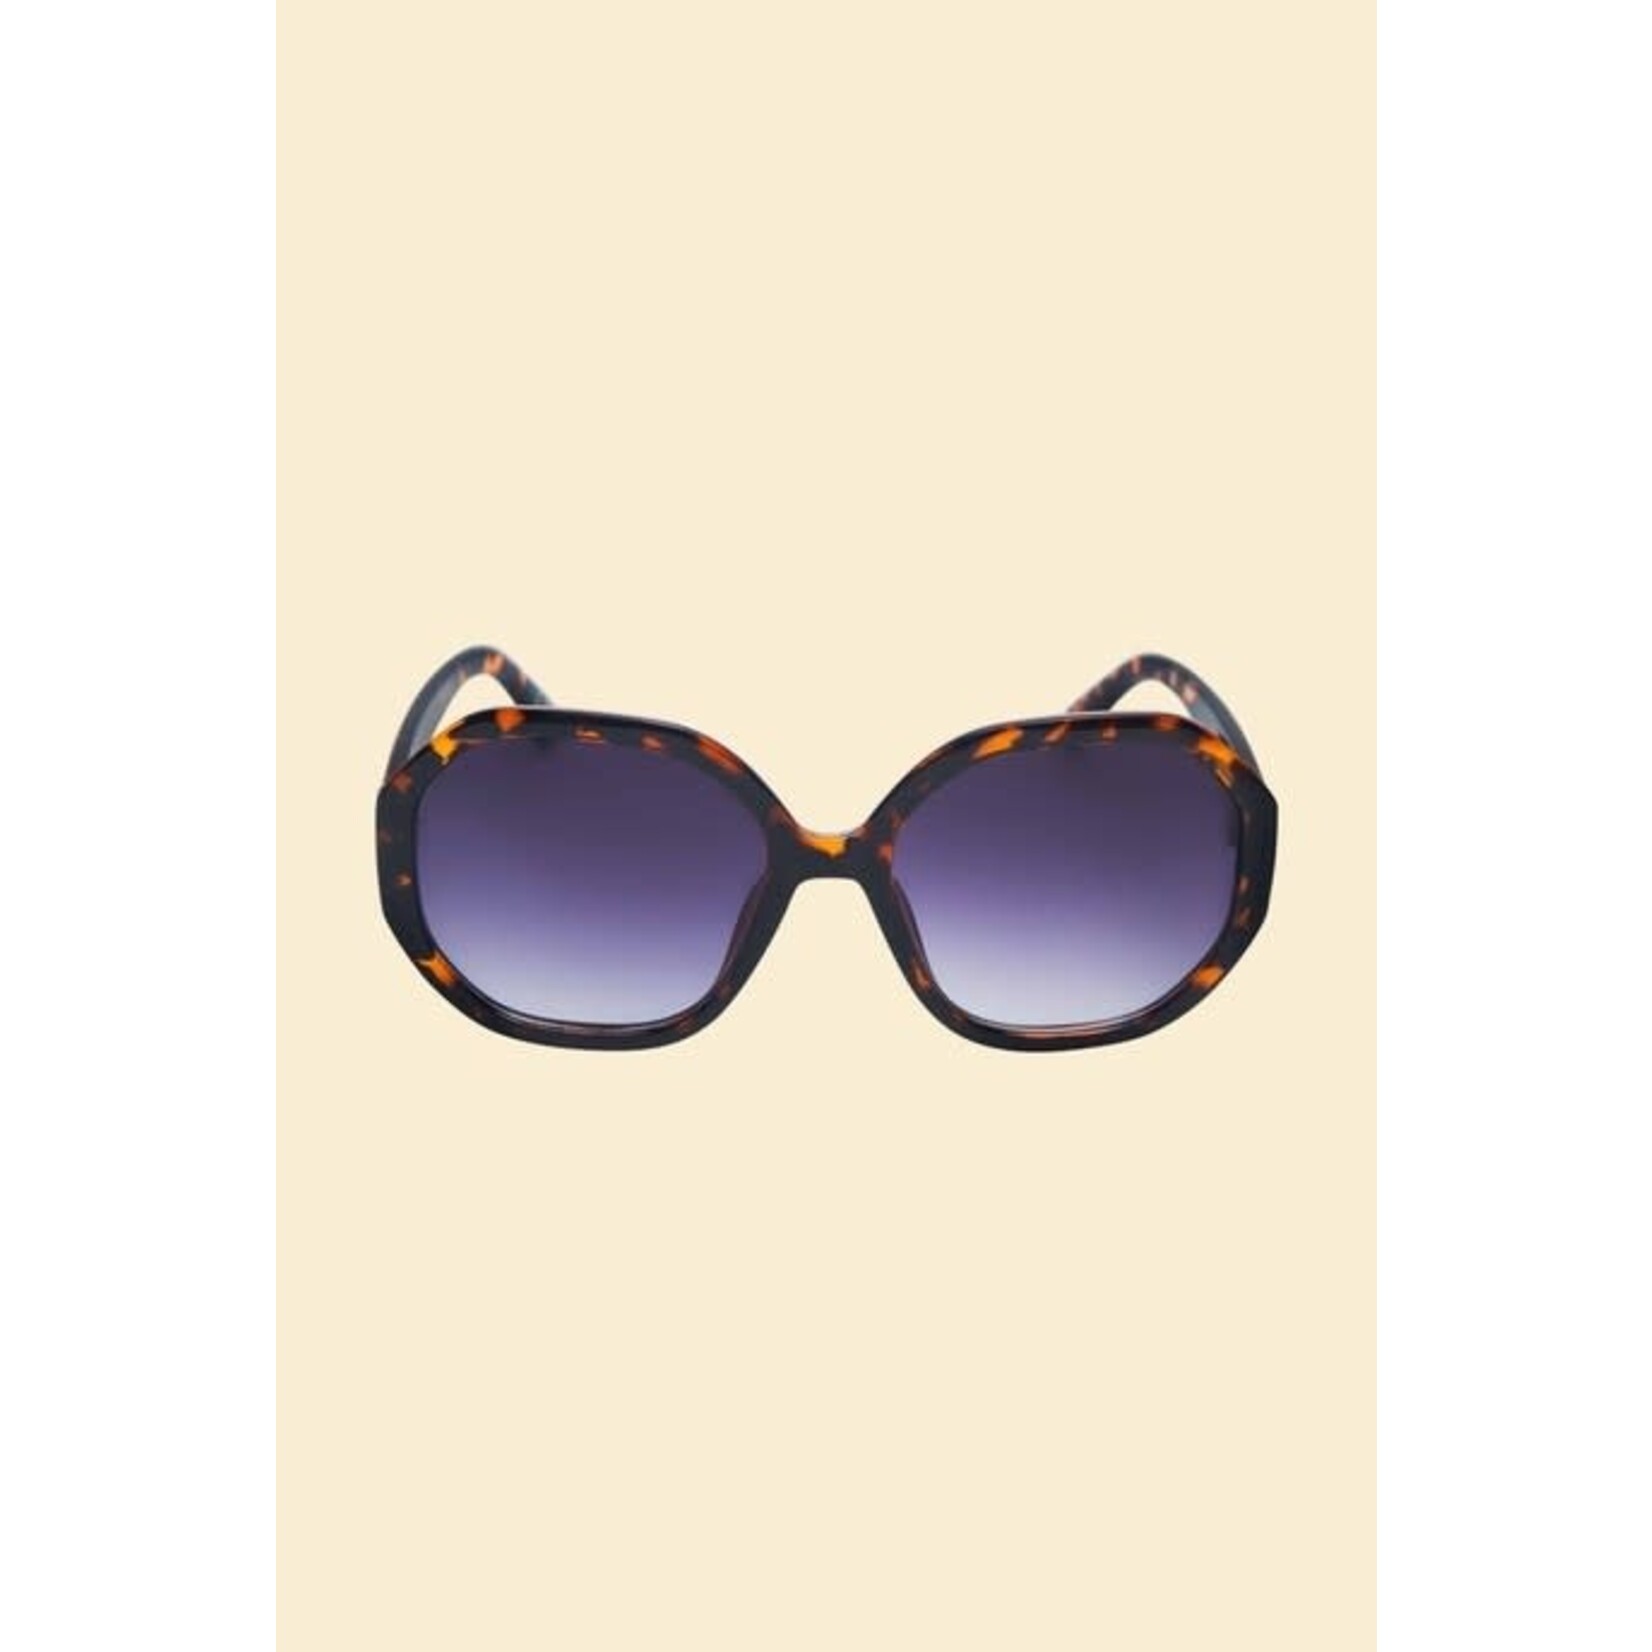 Powder Loretta Limited Edition Sunglasses in Tortoiseshell